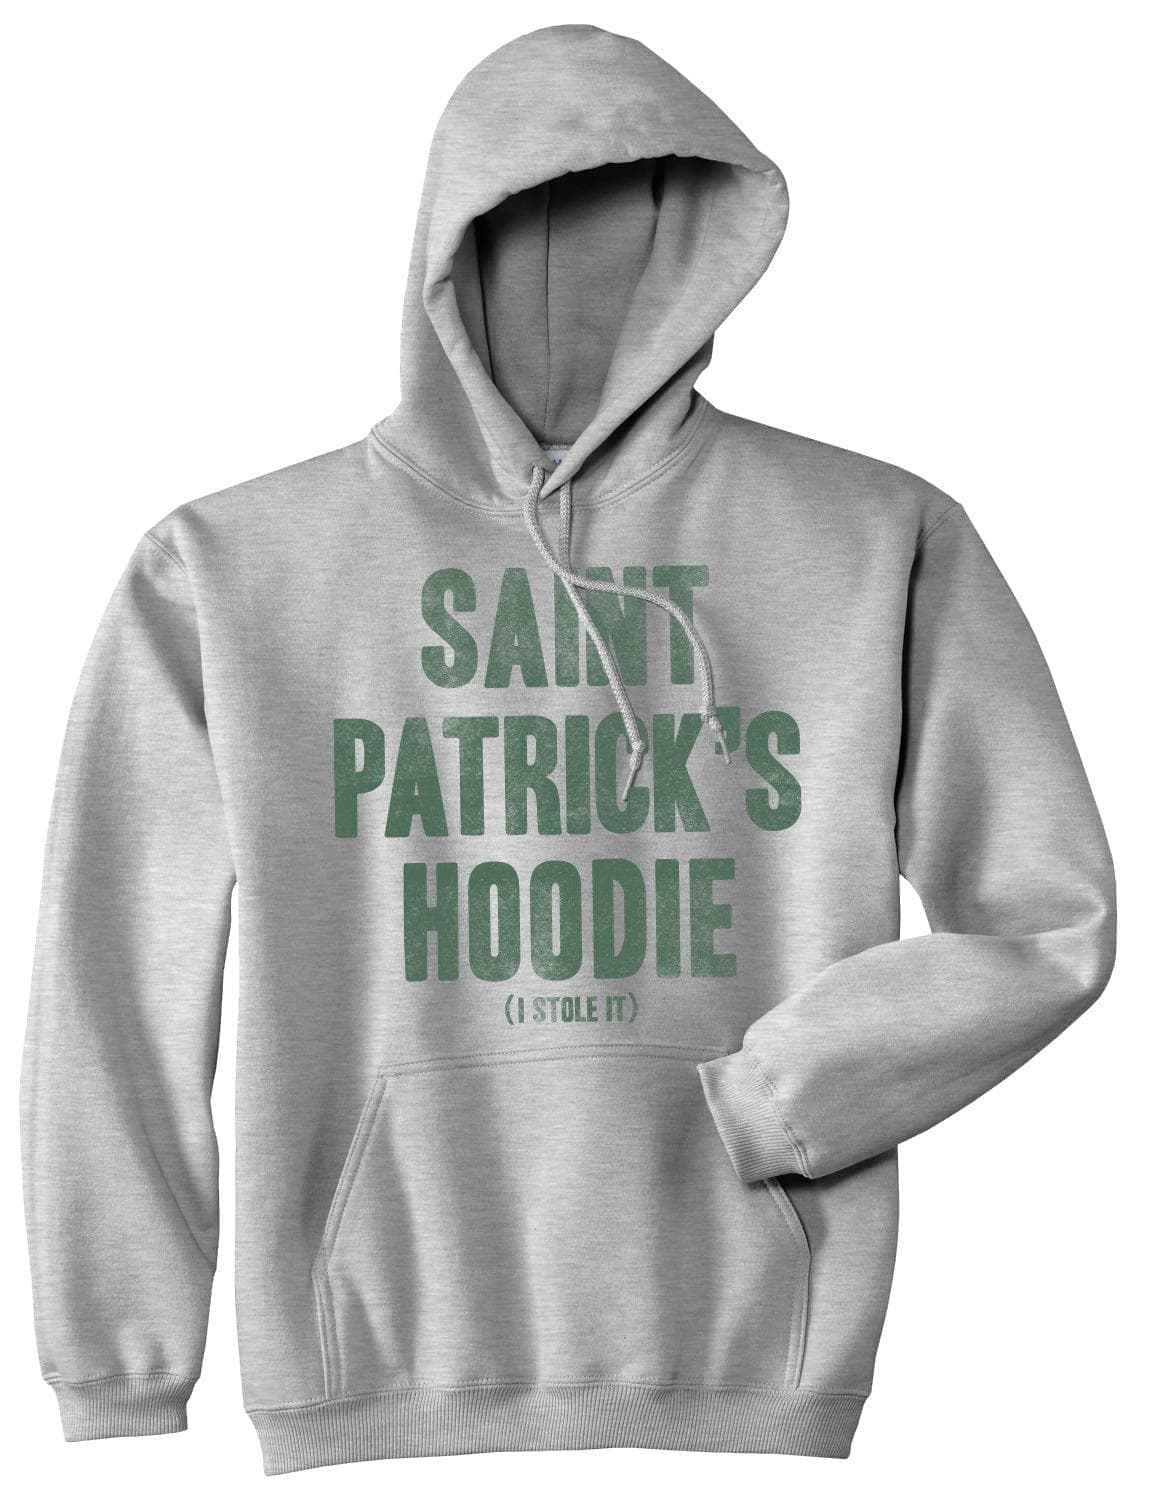 Saint Patrick's Hoodie I Stole It Hoodie  -  Crazy Dog T-Shirts